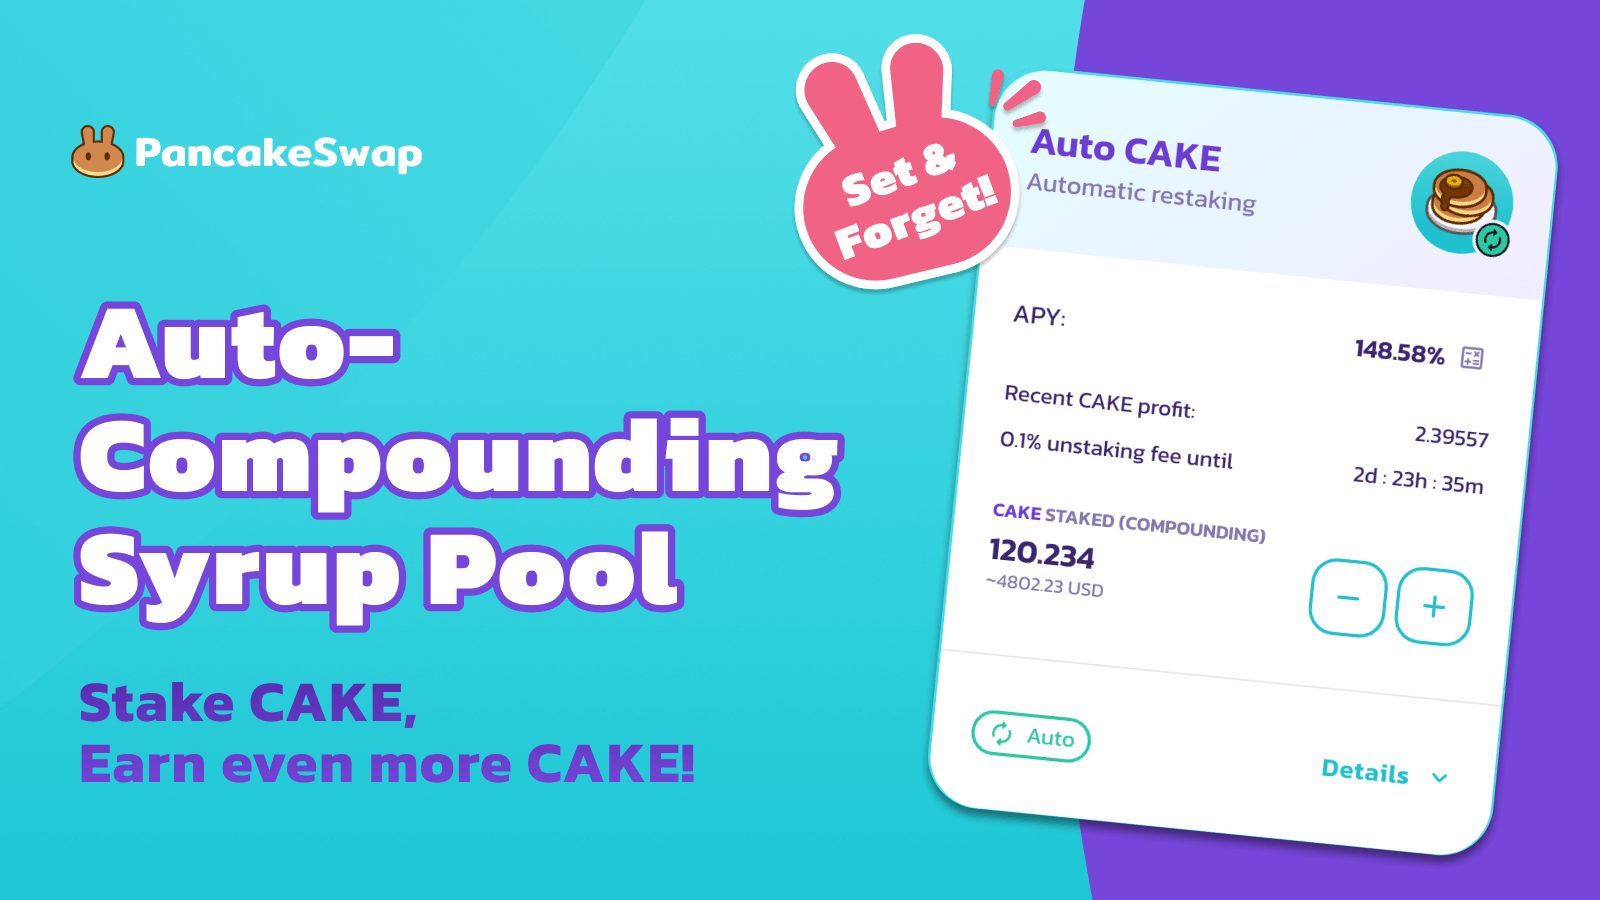 PancakeSwap’s Auto-Compounding Launch